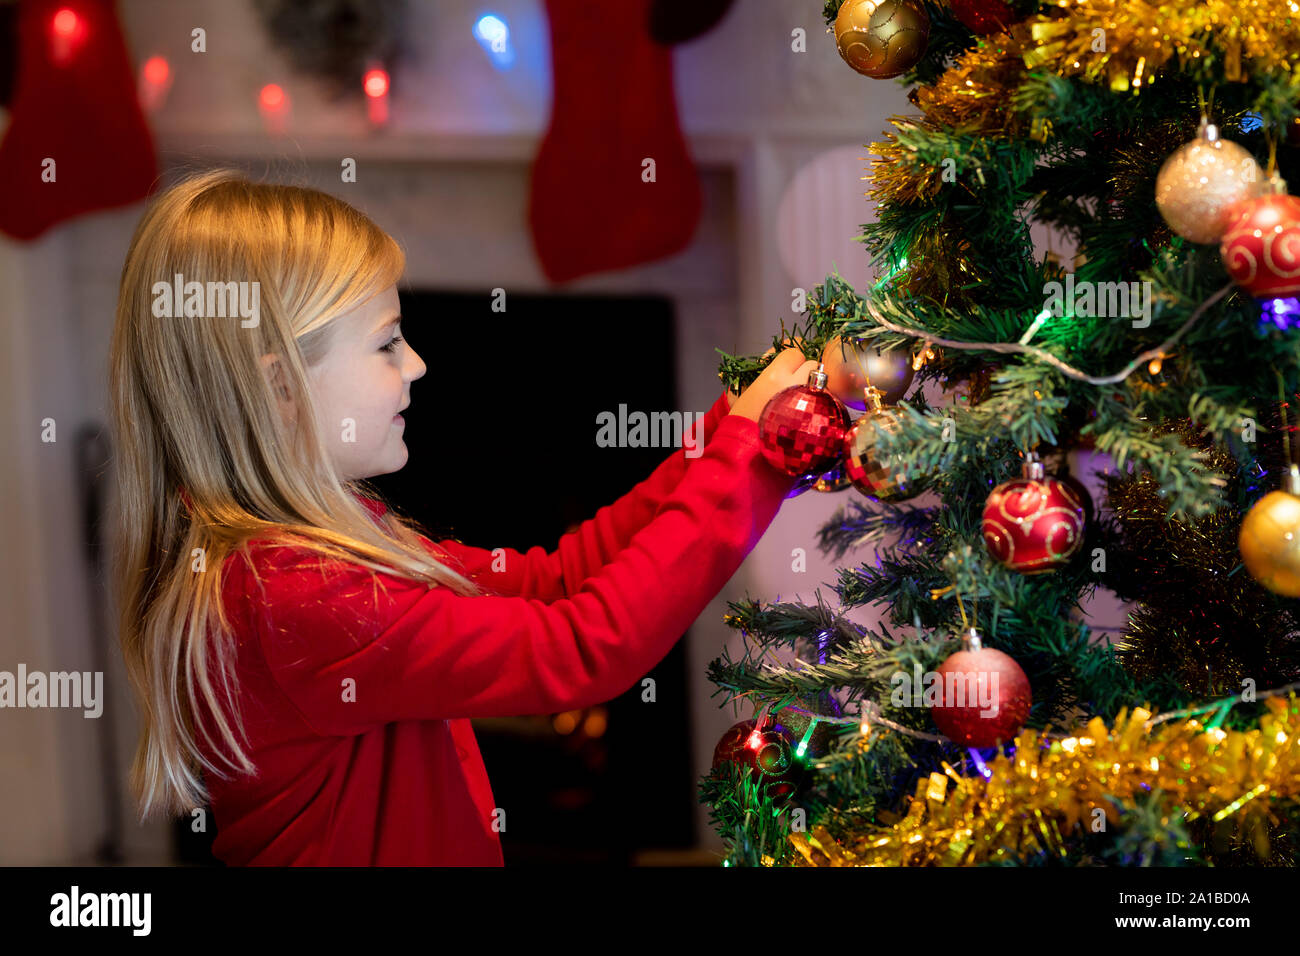 Girl at home at Christmas time Stock Photo